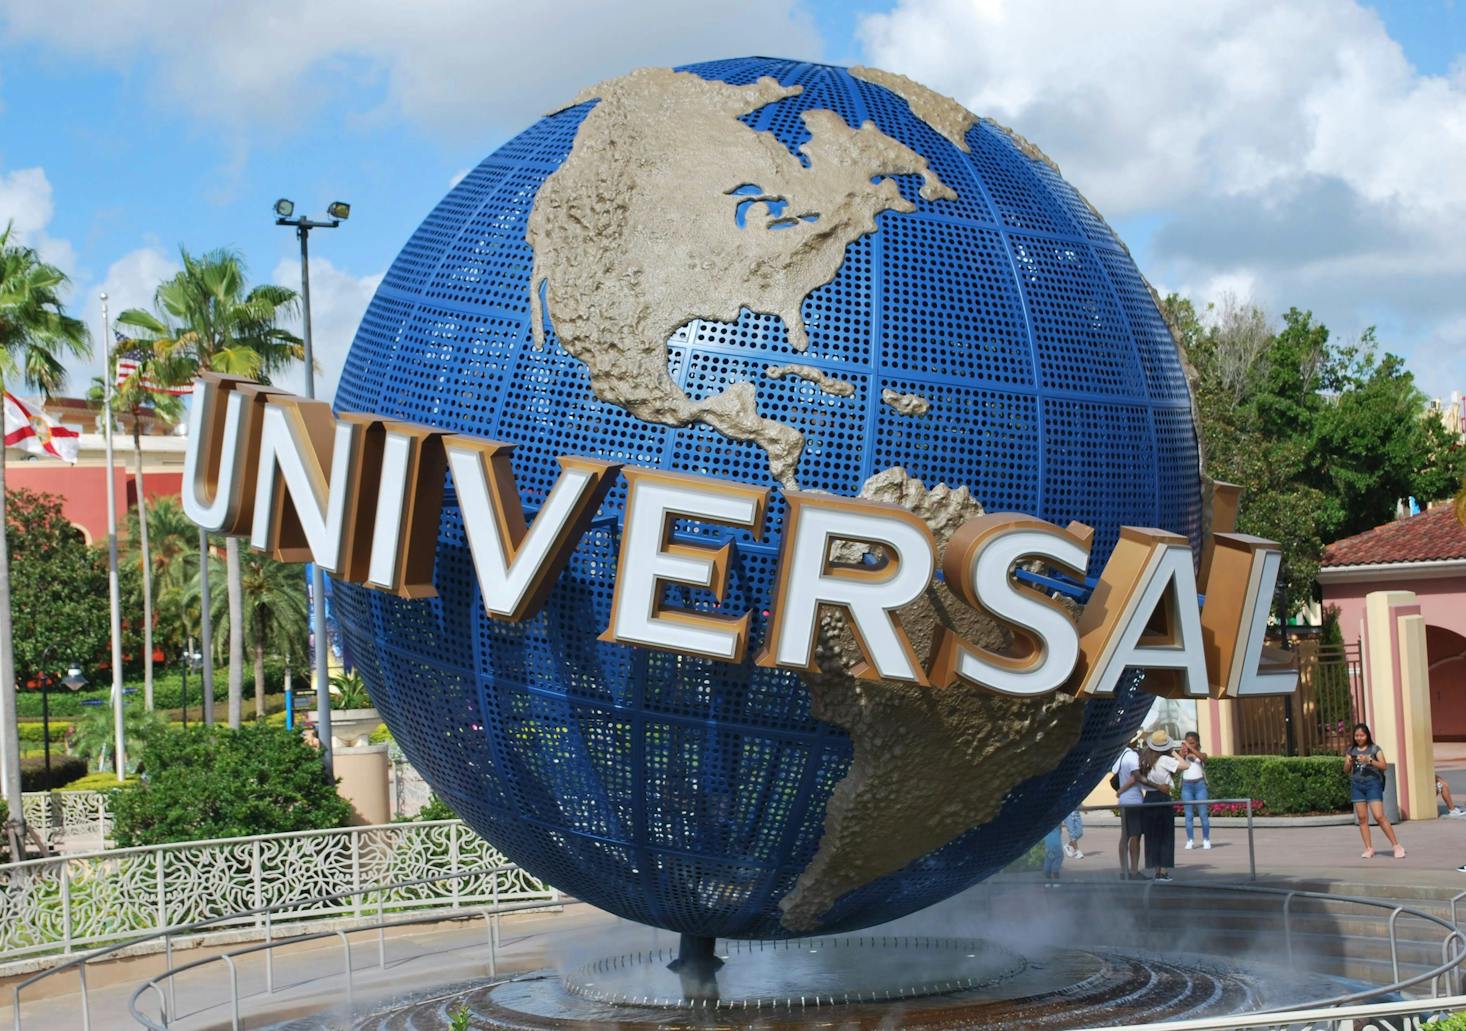 Universal Studios bag policy